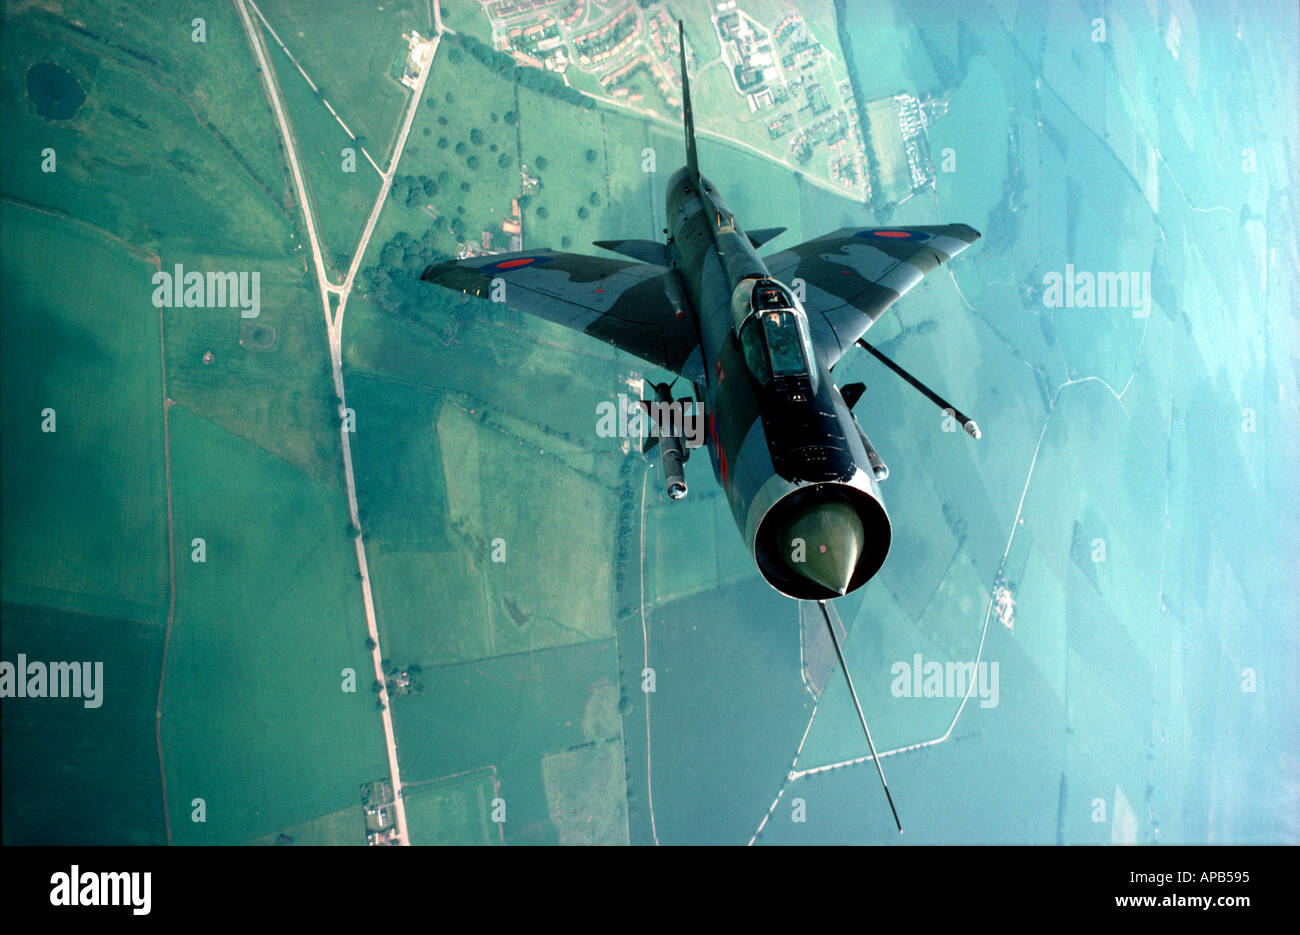 RAF Lightning aircraft Stock Photo